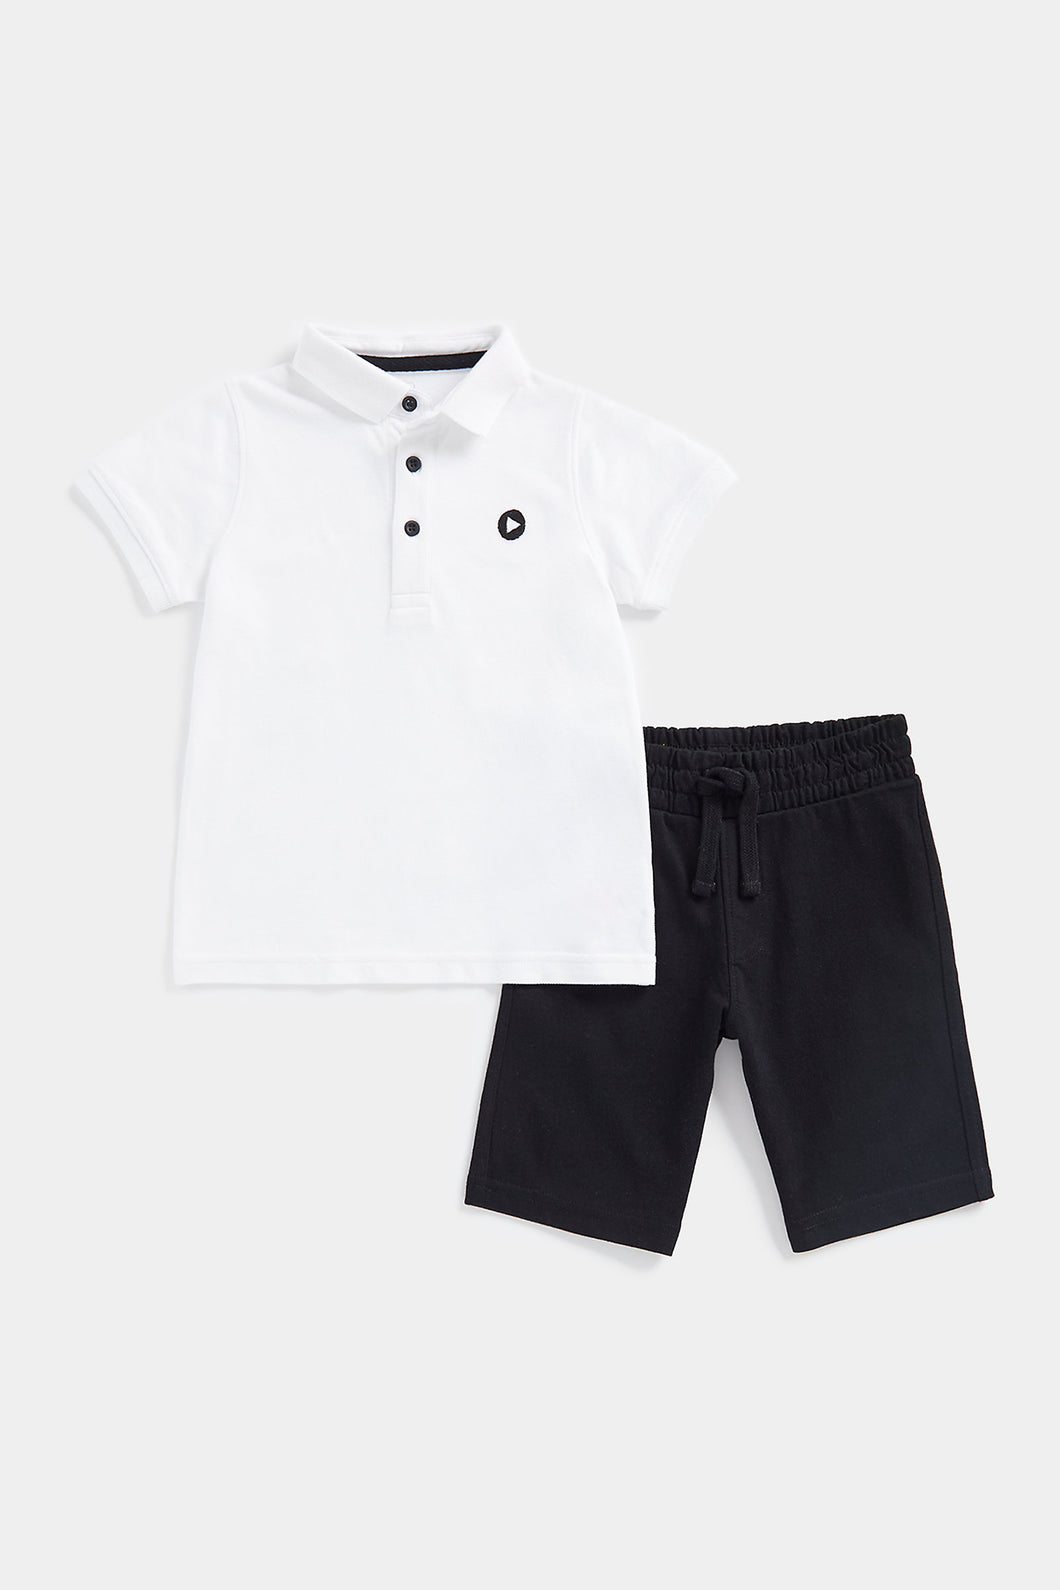 Mothercare Polo Shirt and Shorts Set